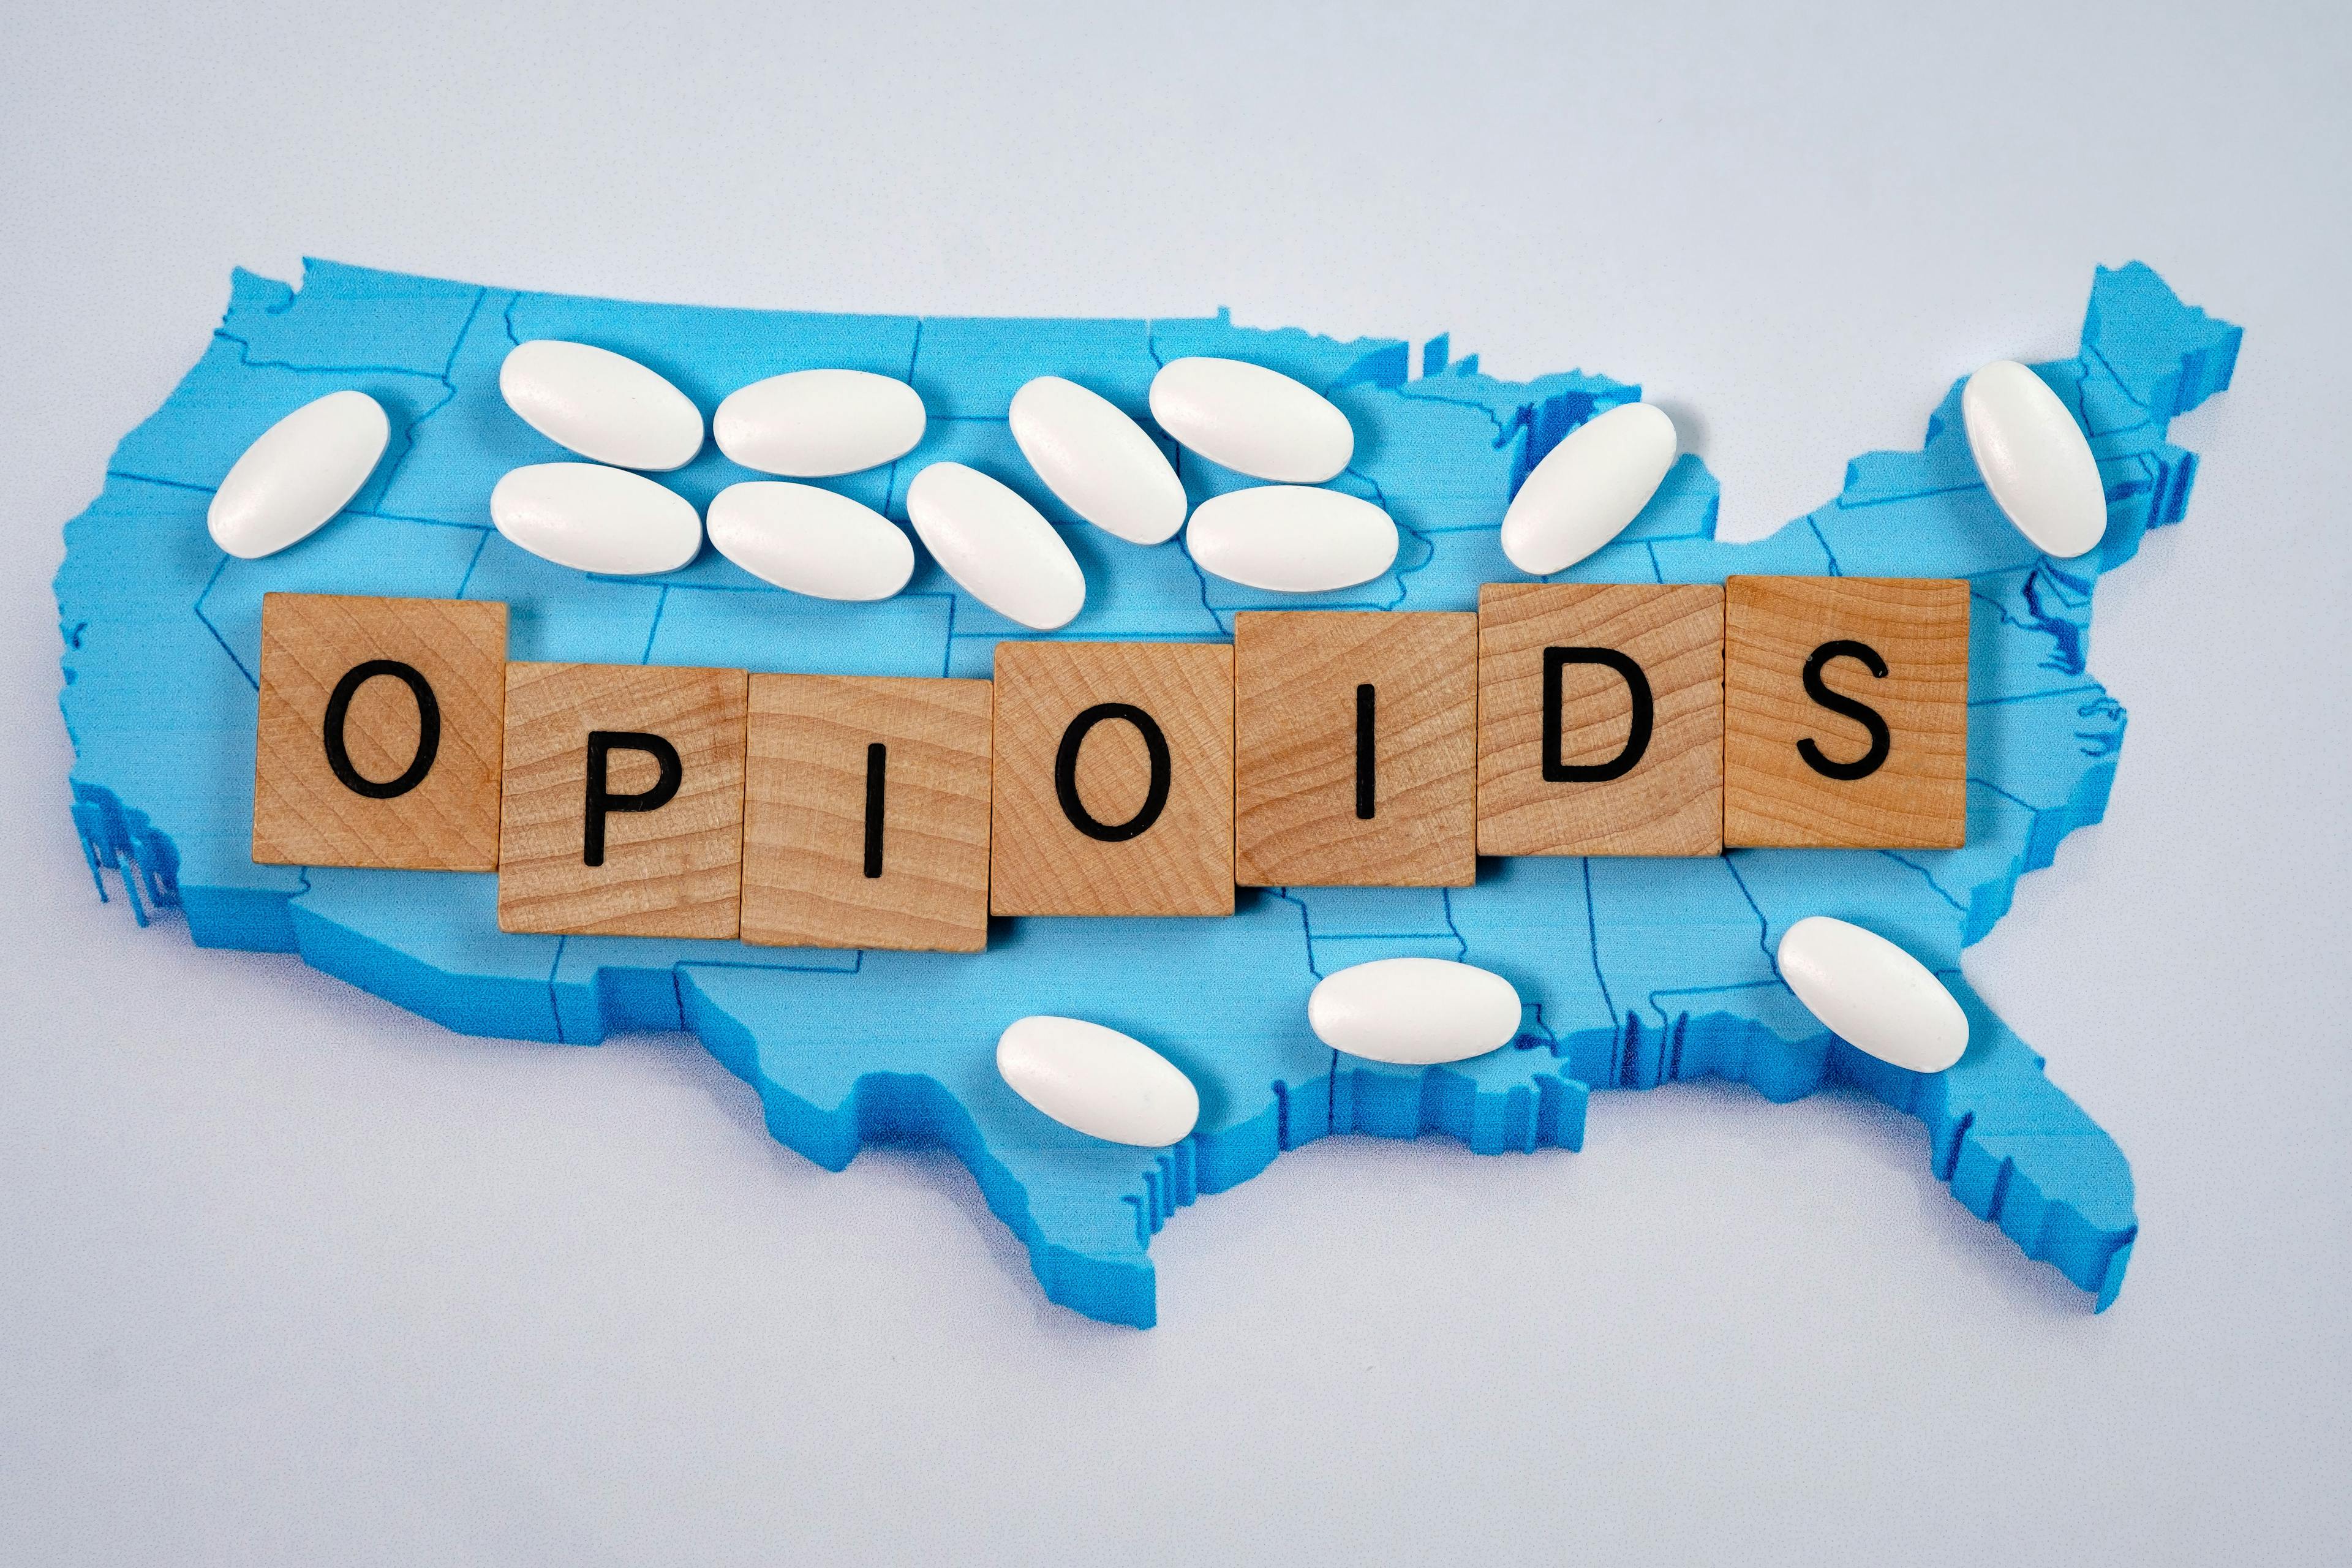 opioid, opioid crisis, electronic prescribing, legal controlled substance